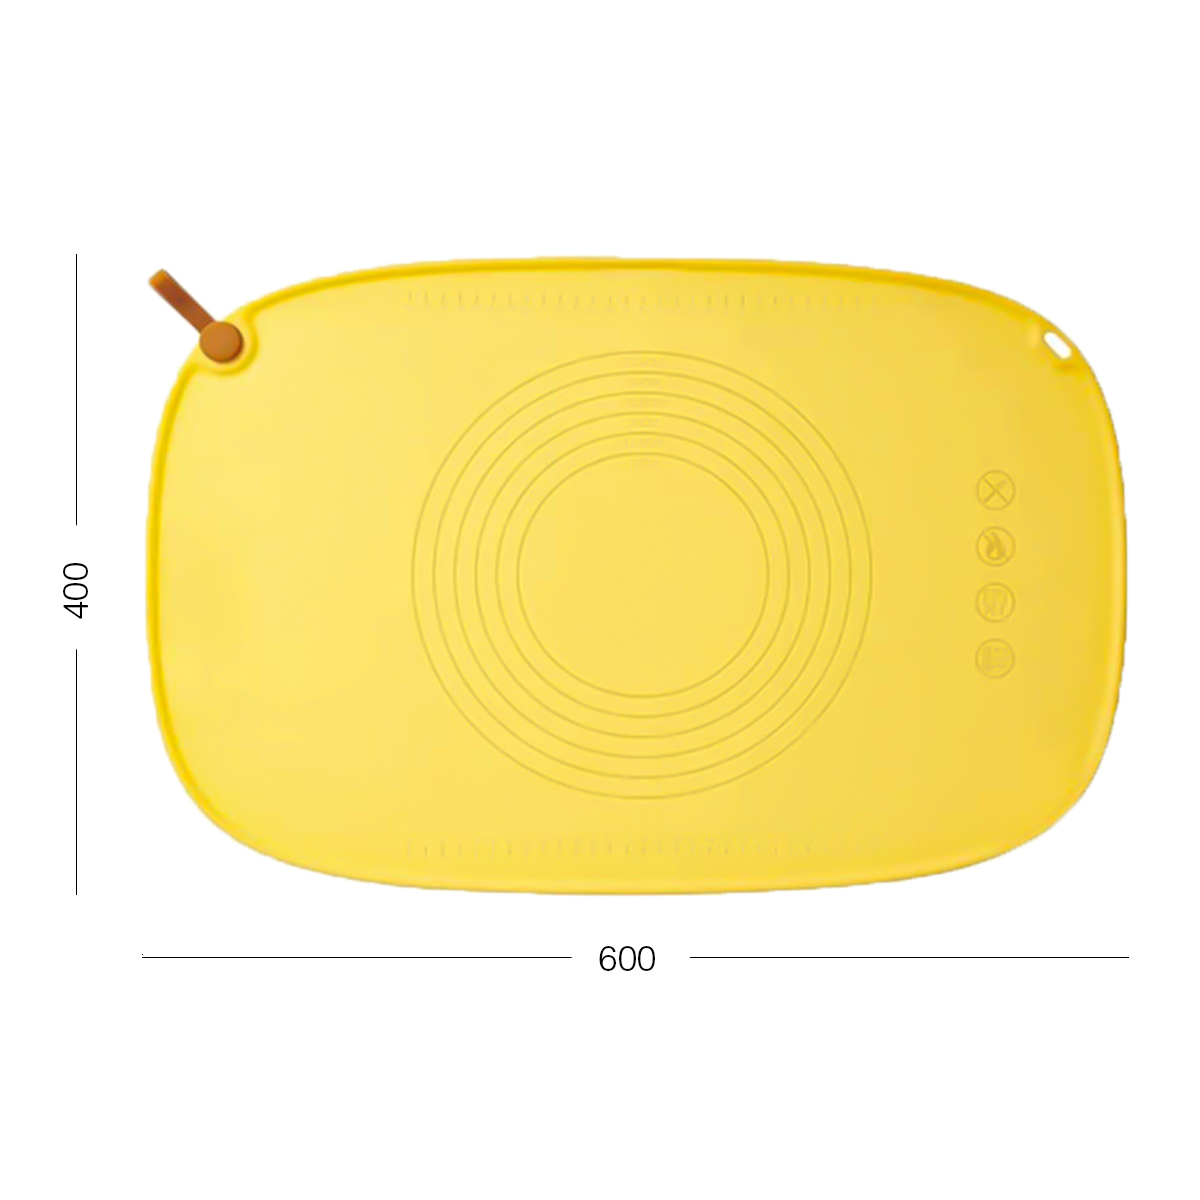 Коврик силиконовый для теста МВМ My Home (MVM) 60x40 см желтый (KP-84 YELLOW) - фото 2